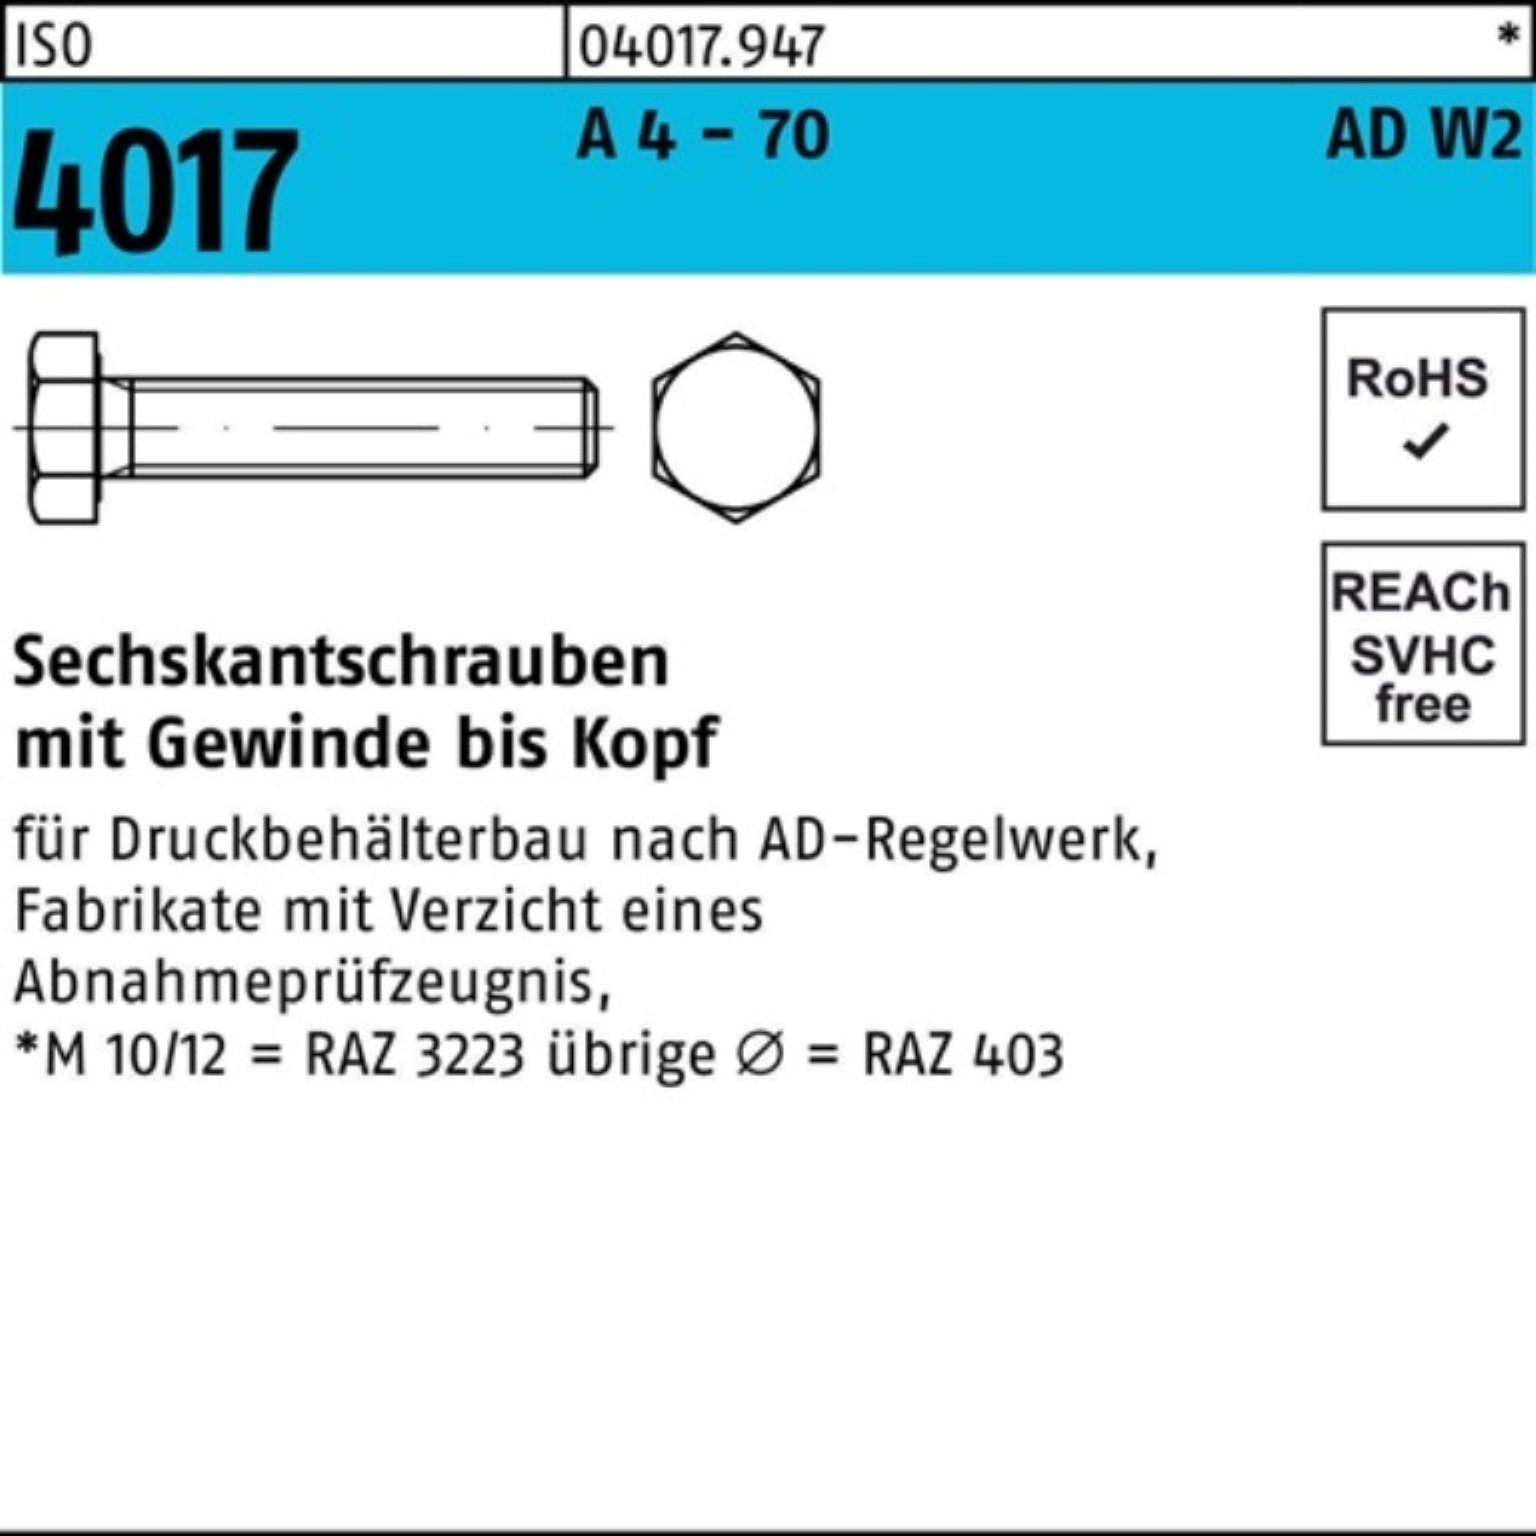 Sechskantschraube - 70 Sechskantschraube ISO VG 4017 M8x St AD-W2 Bufab 4 Pack A 100 100er 40